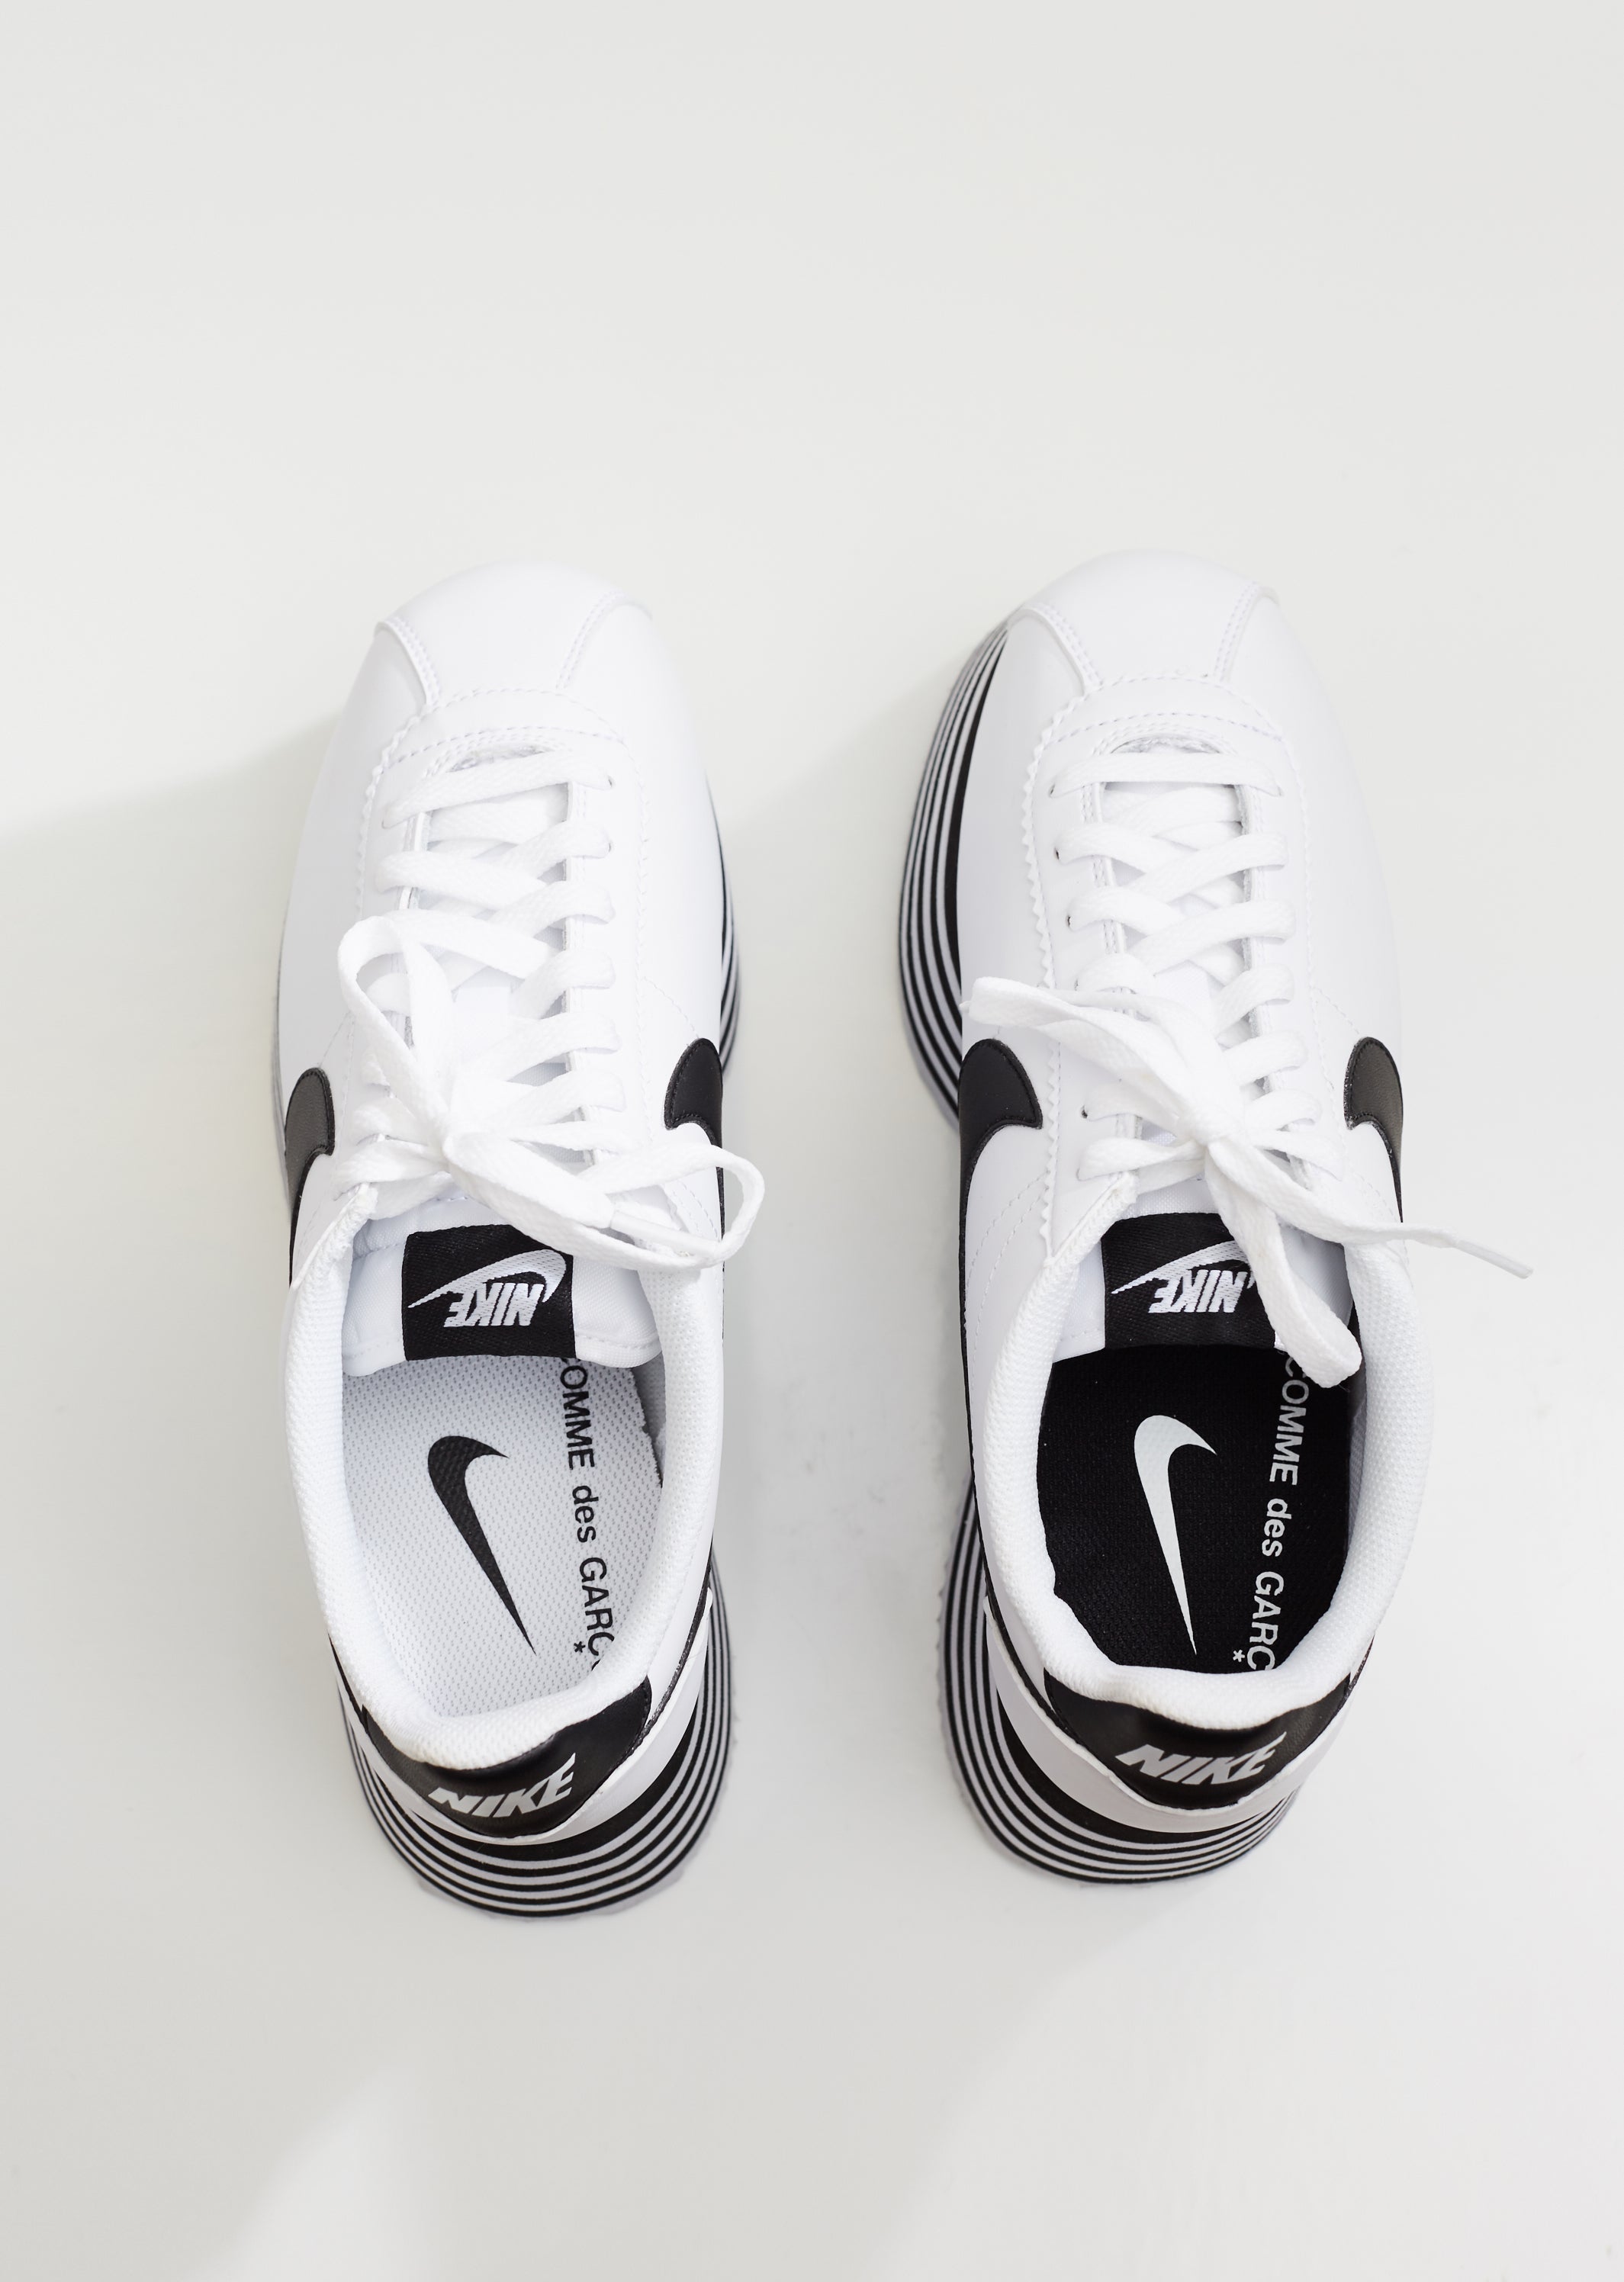 Nike NIKE CORTEZ Black/White - black/white